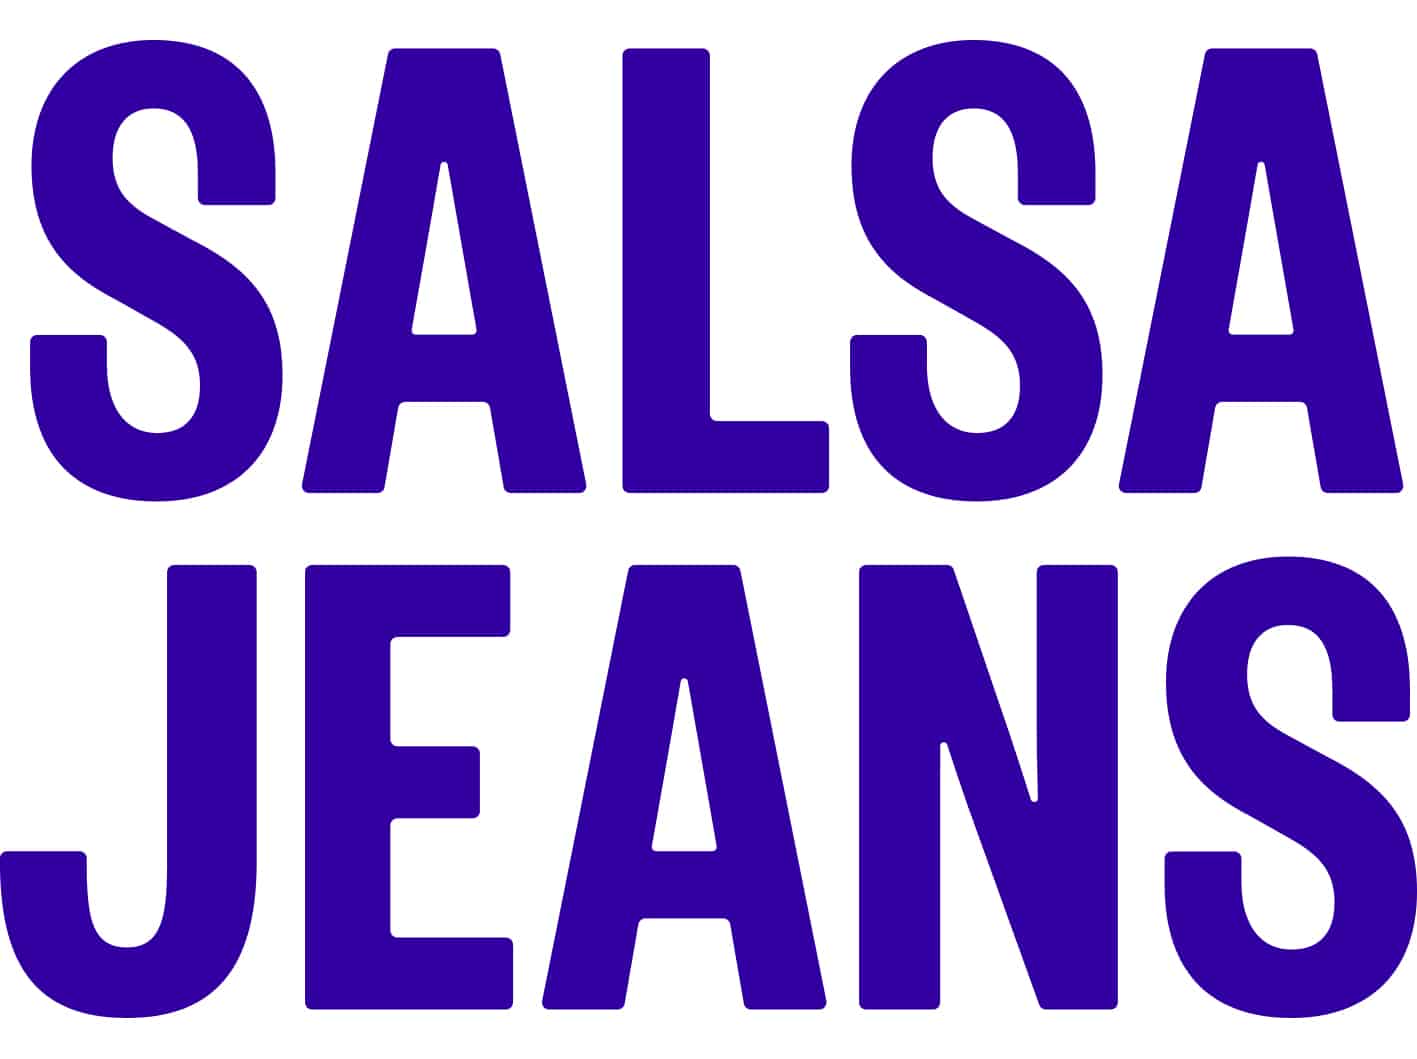 Salsa Jeans